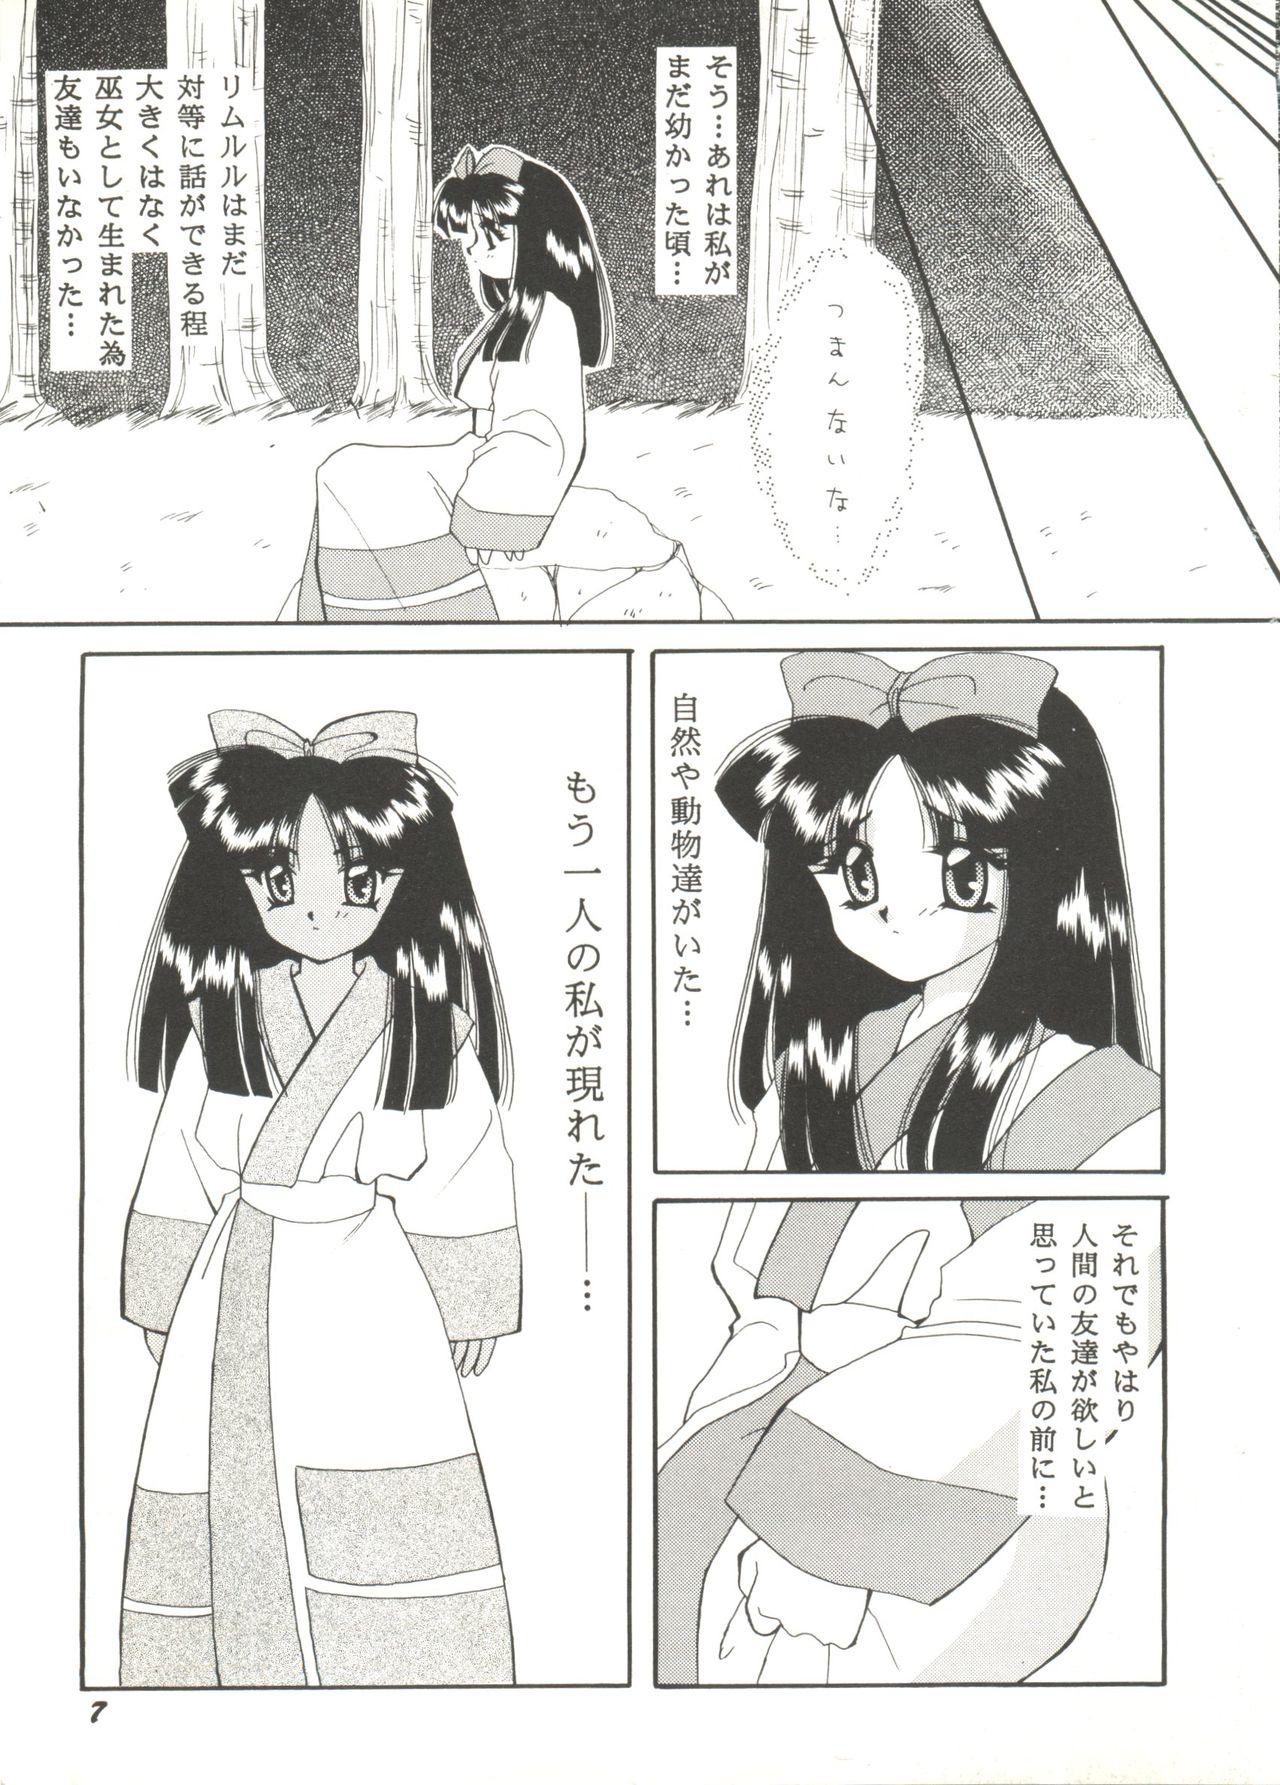 Negra Bishoujo Doujin Peach Club - Pretty Gal's Fanzine Peach Club 8 - Sailor moon Samurai spirits Exposed - Page 10